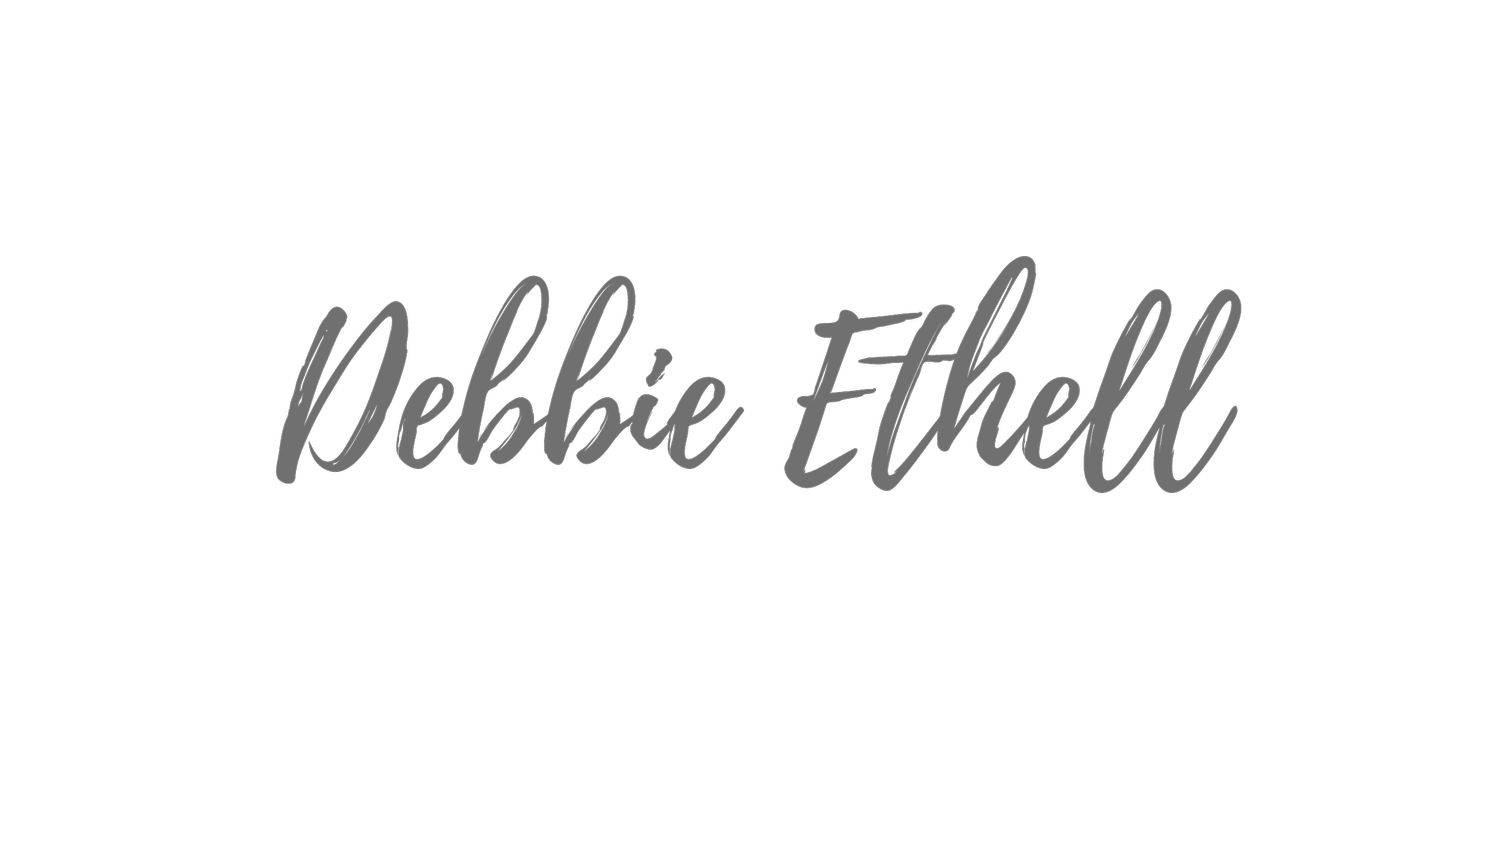 Debbie Ethell